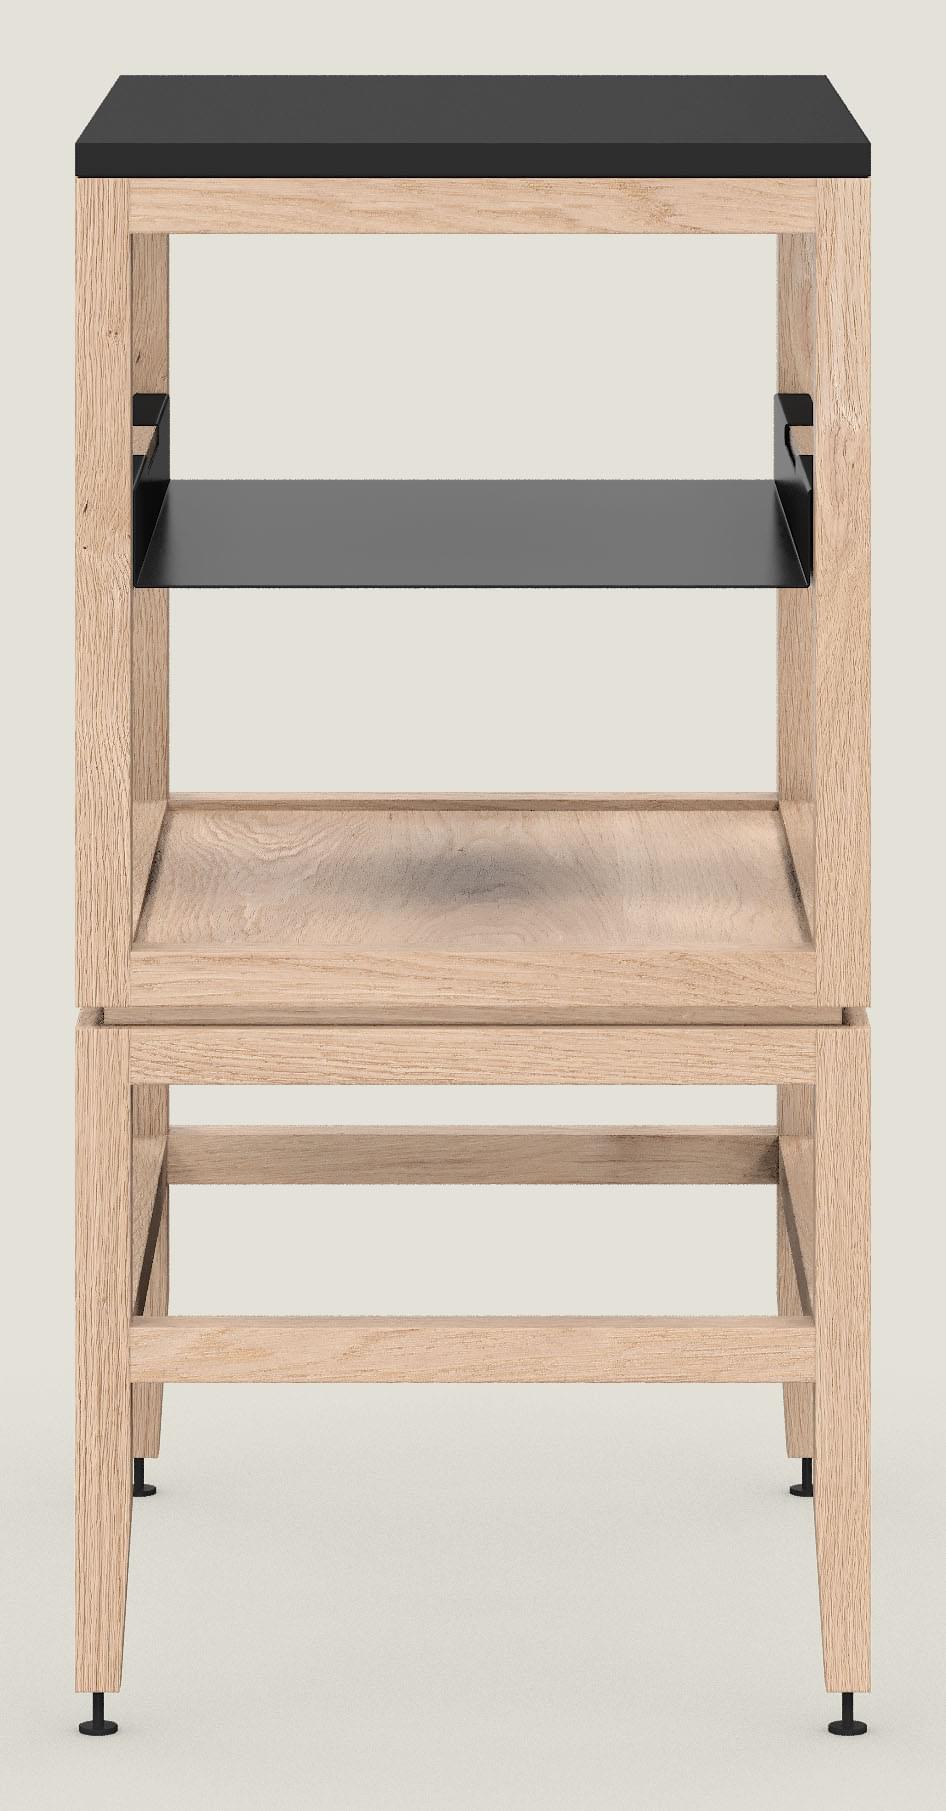 Coquo modular open kitchen cabinet in natural oak with metal shelf. 